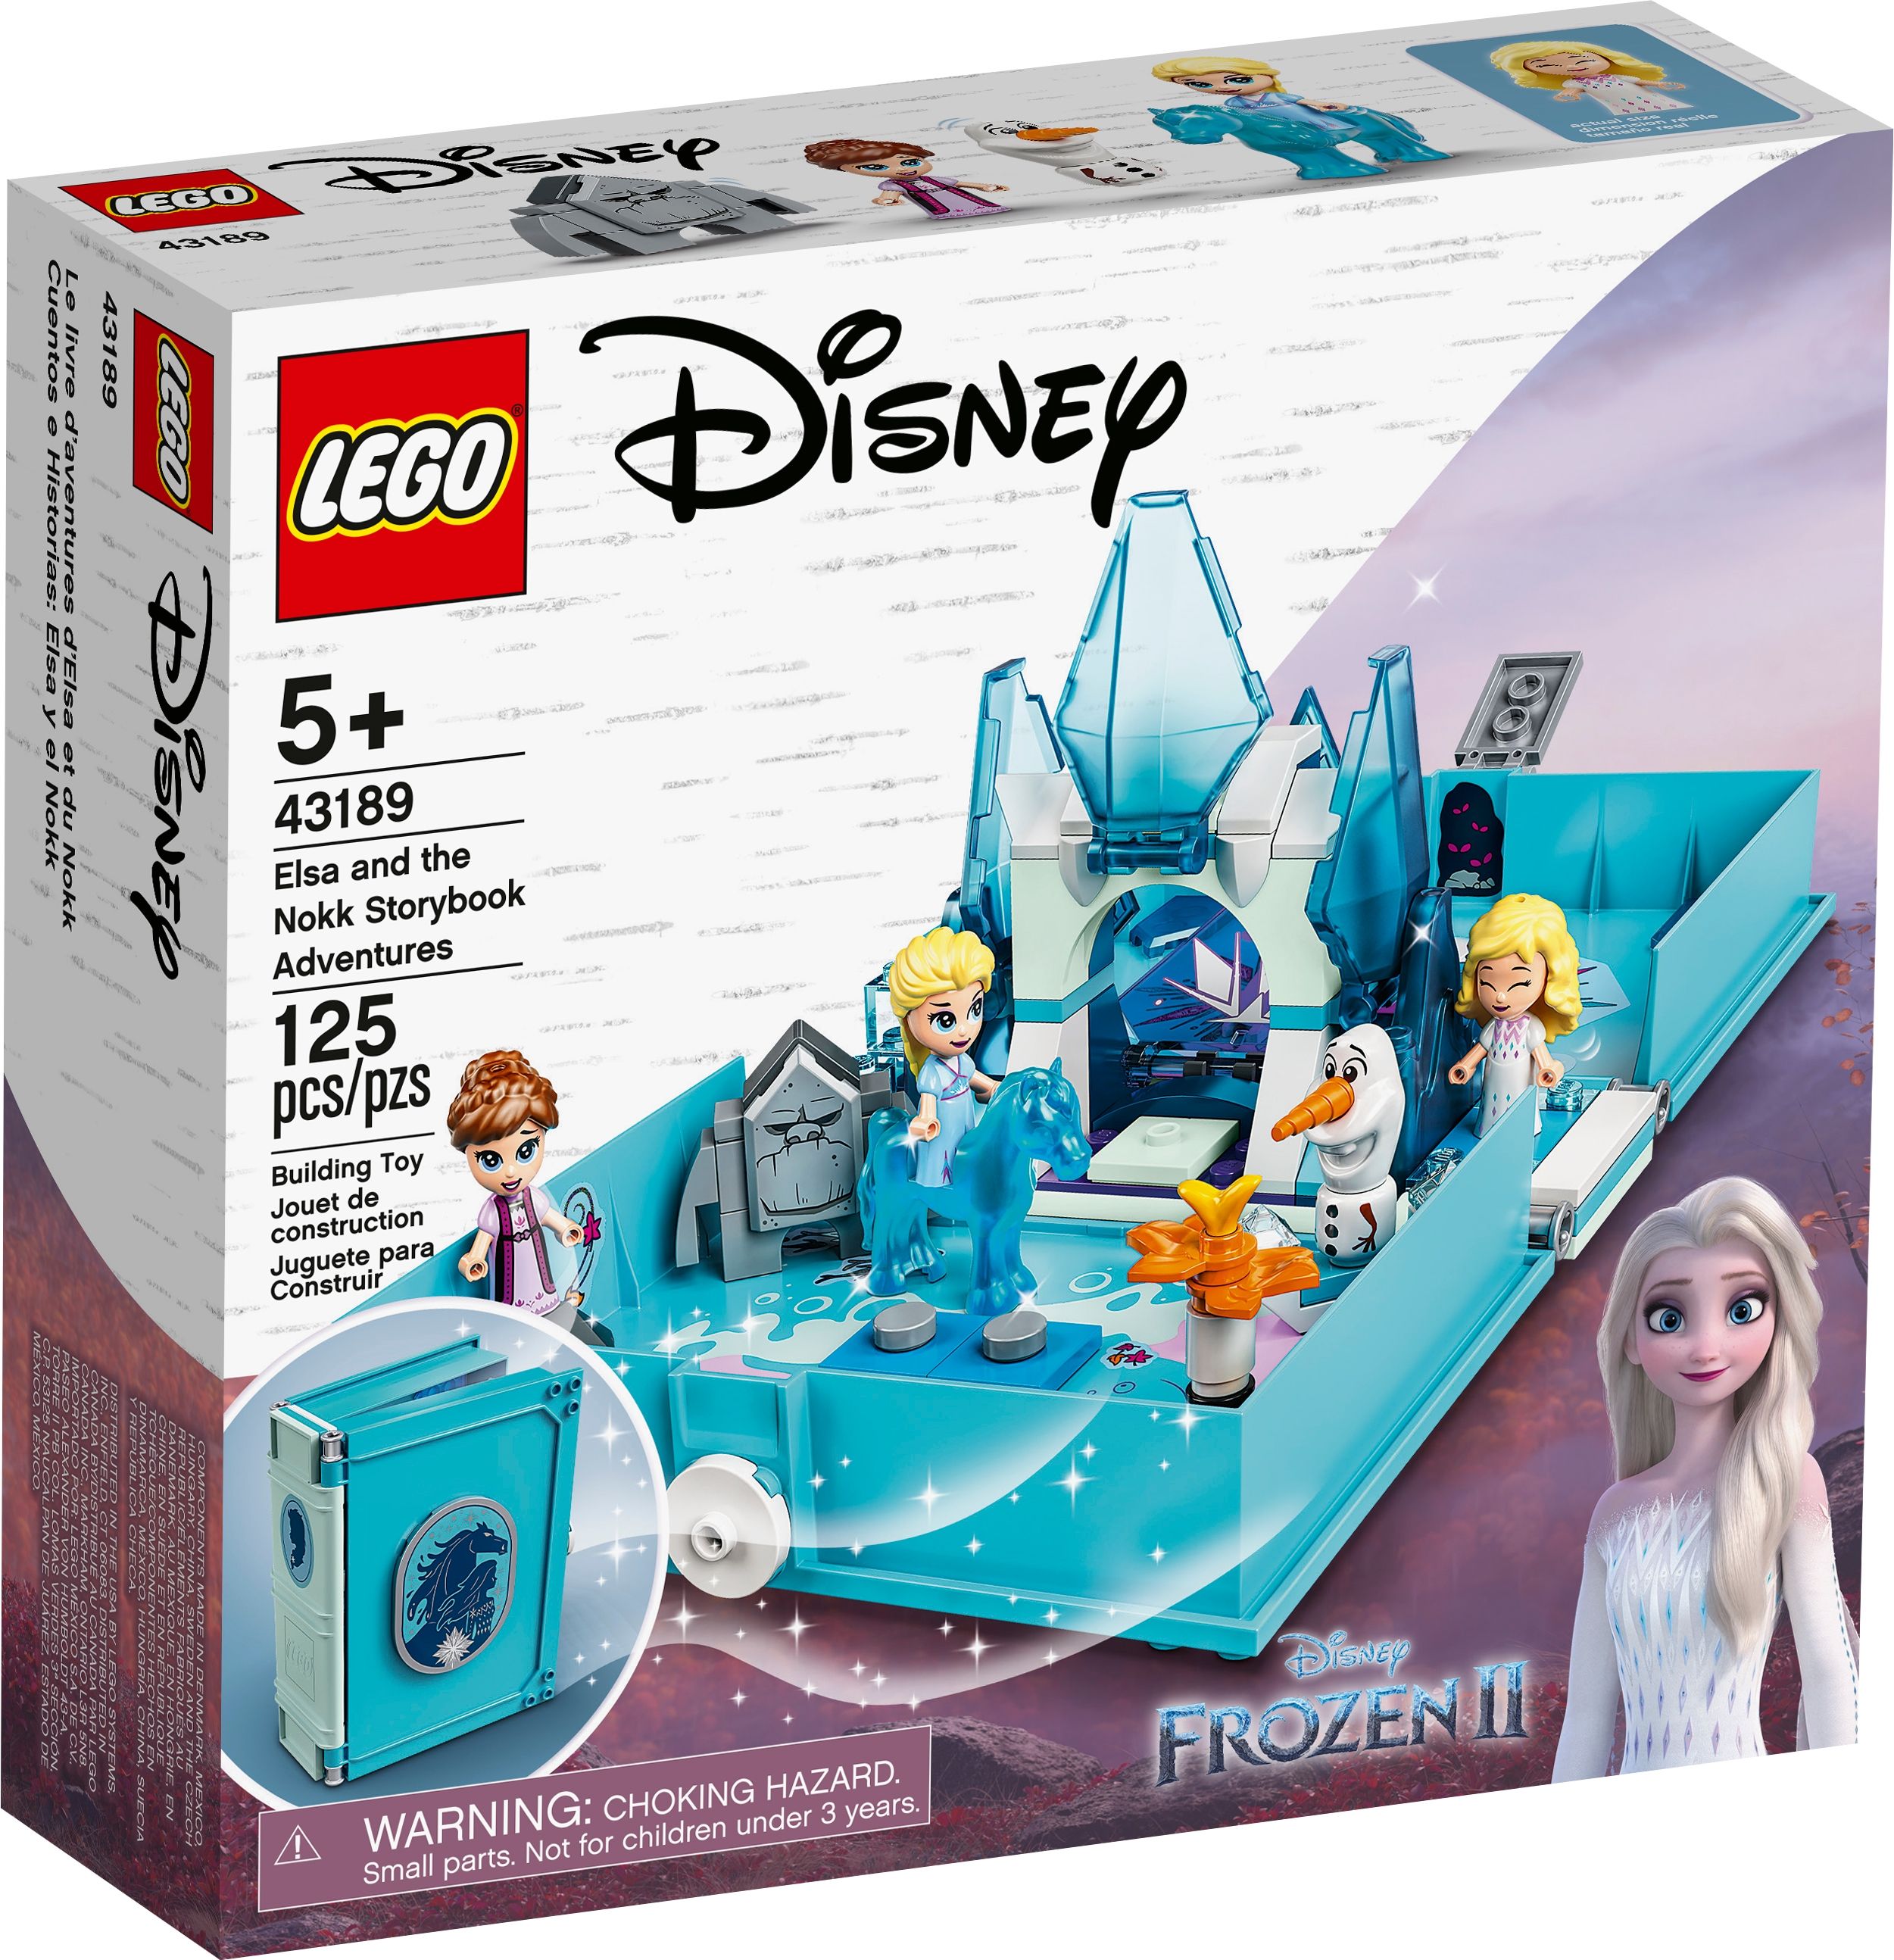 LEGO Disney 43189 Elsas Märchenbuch LEGO_43189_alt1.jpg